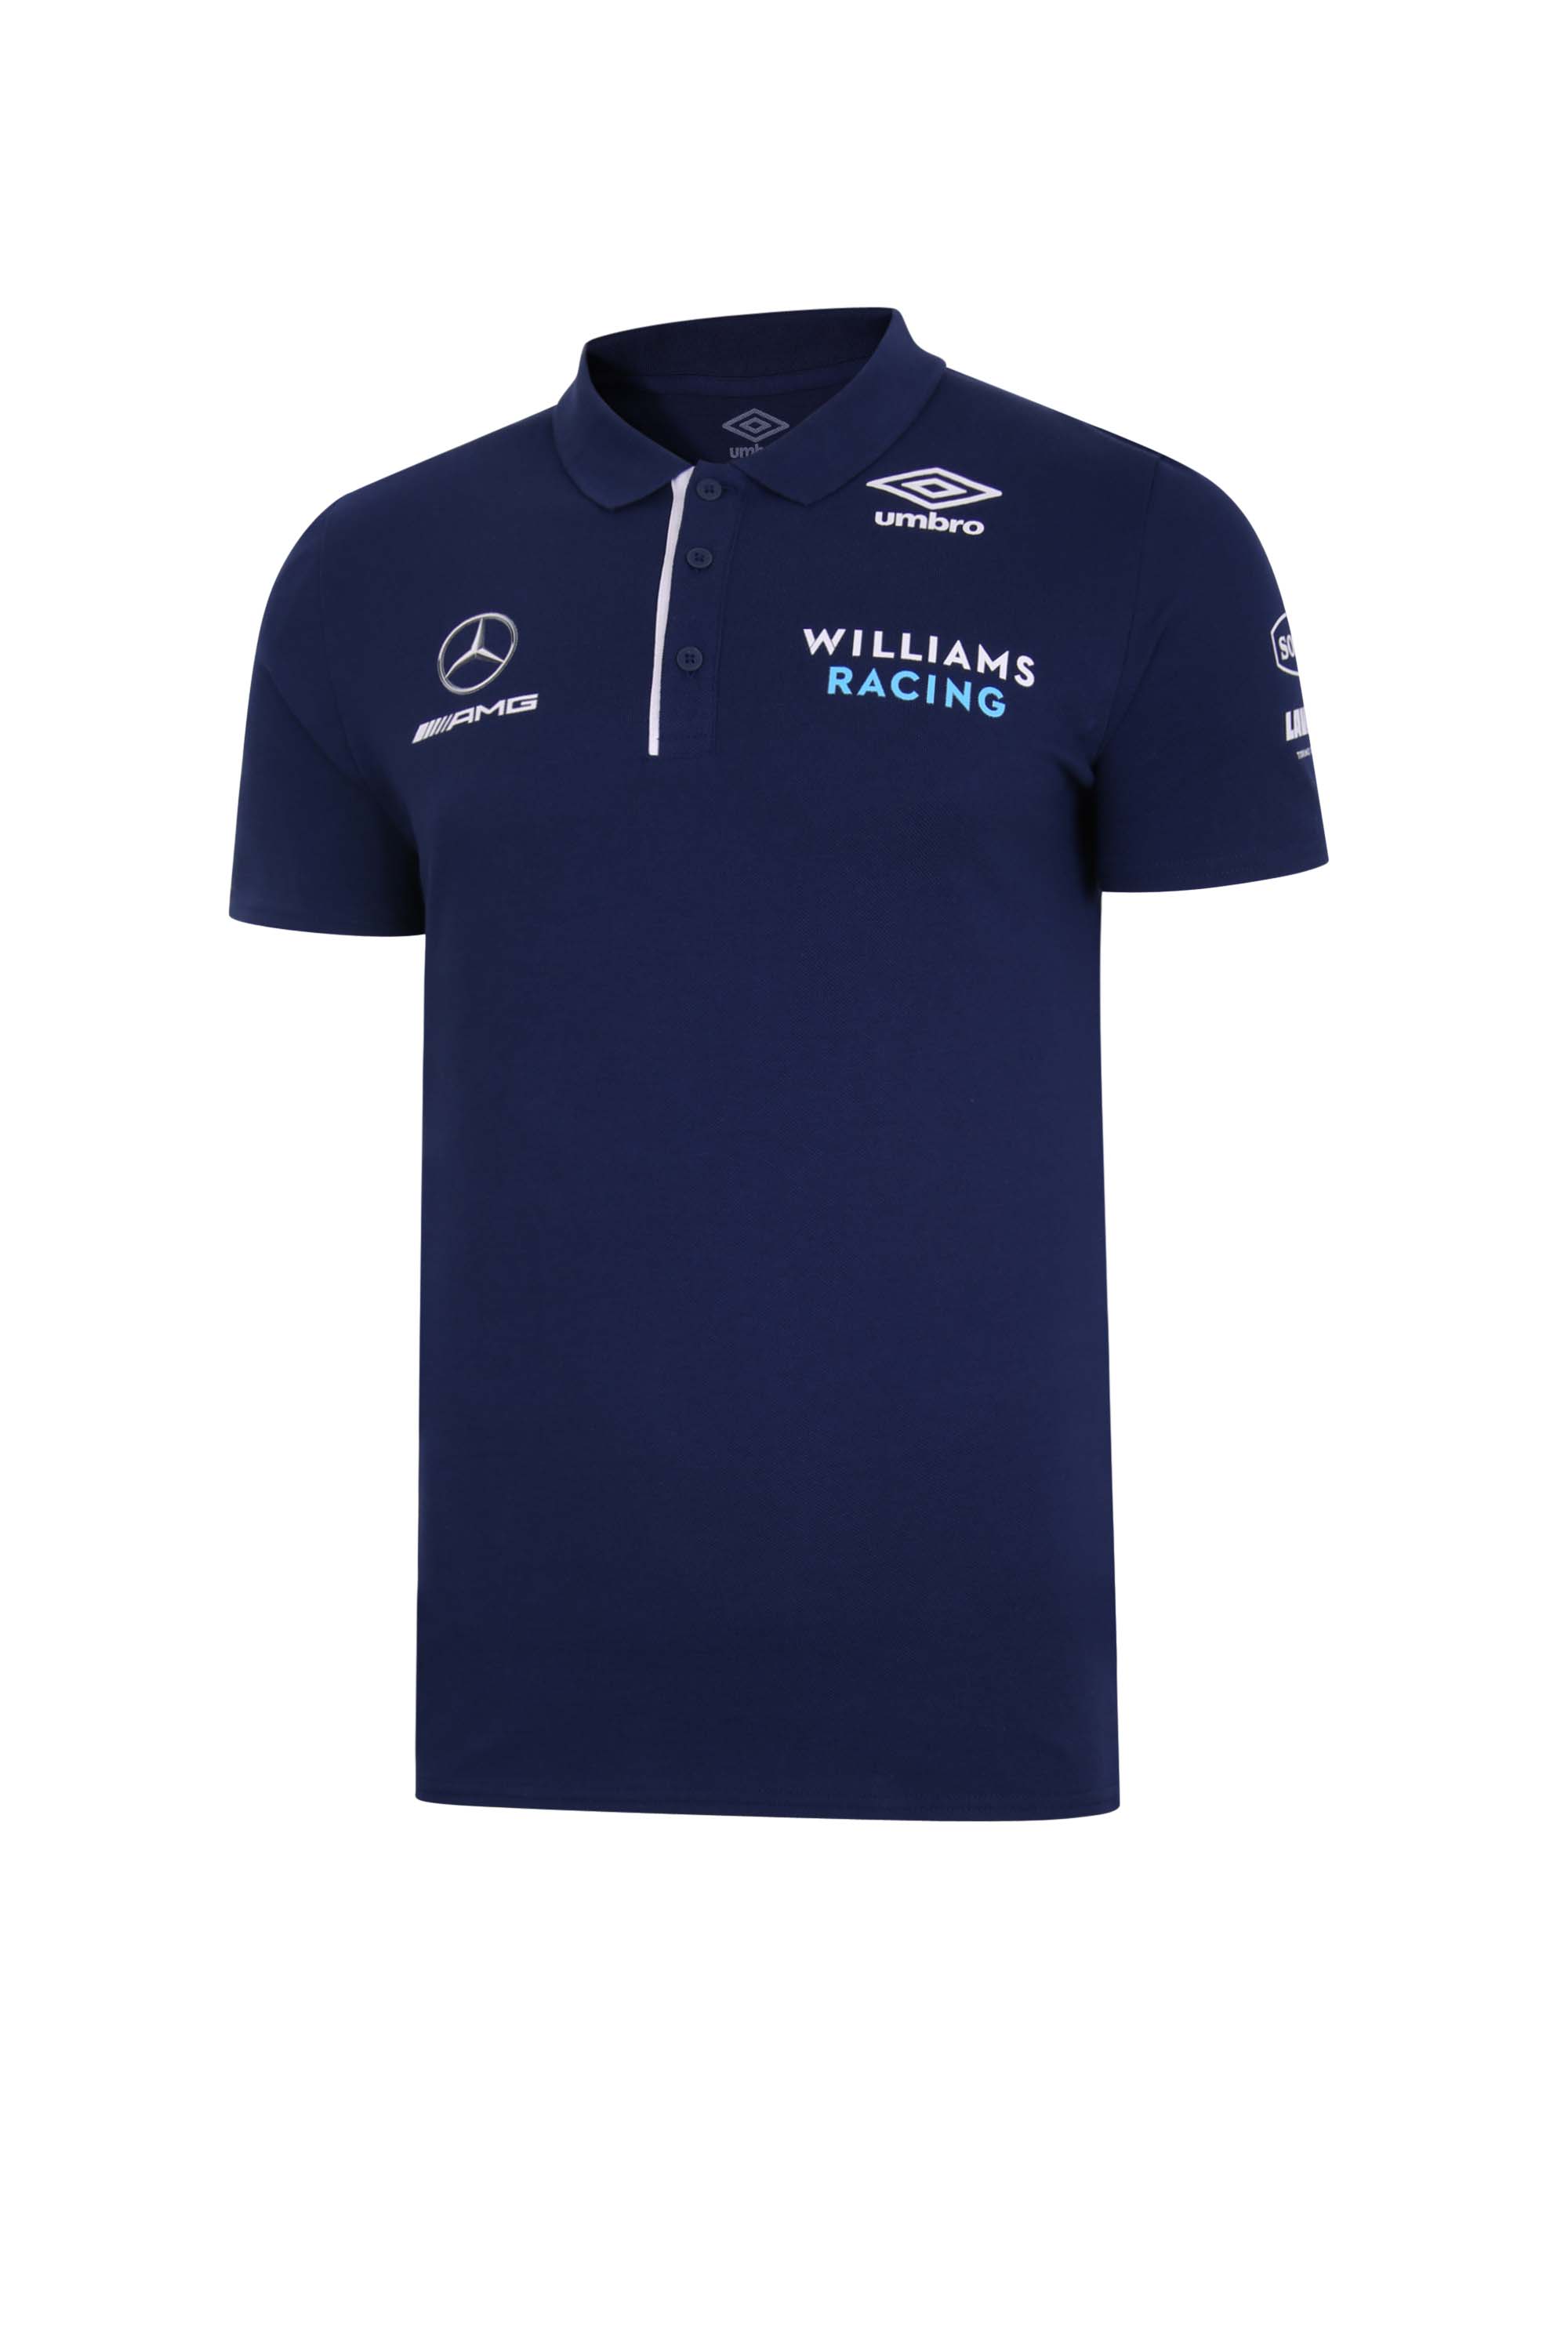 Williams F1 merchandise